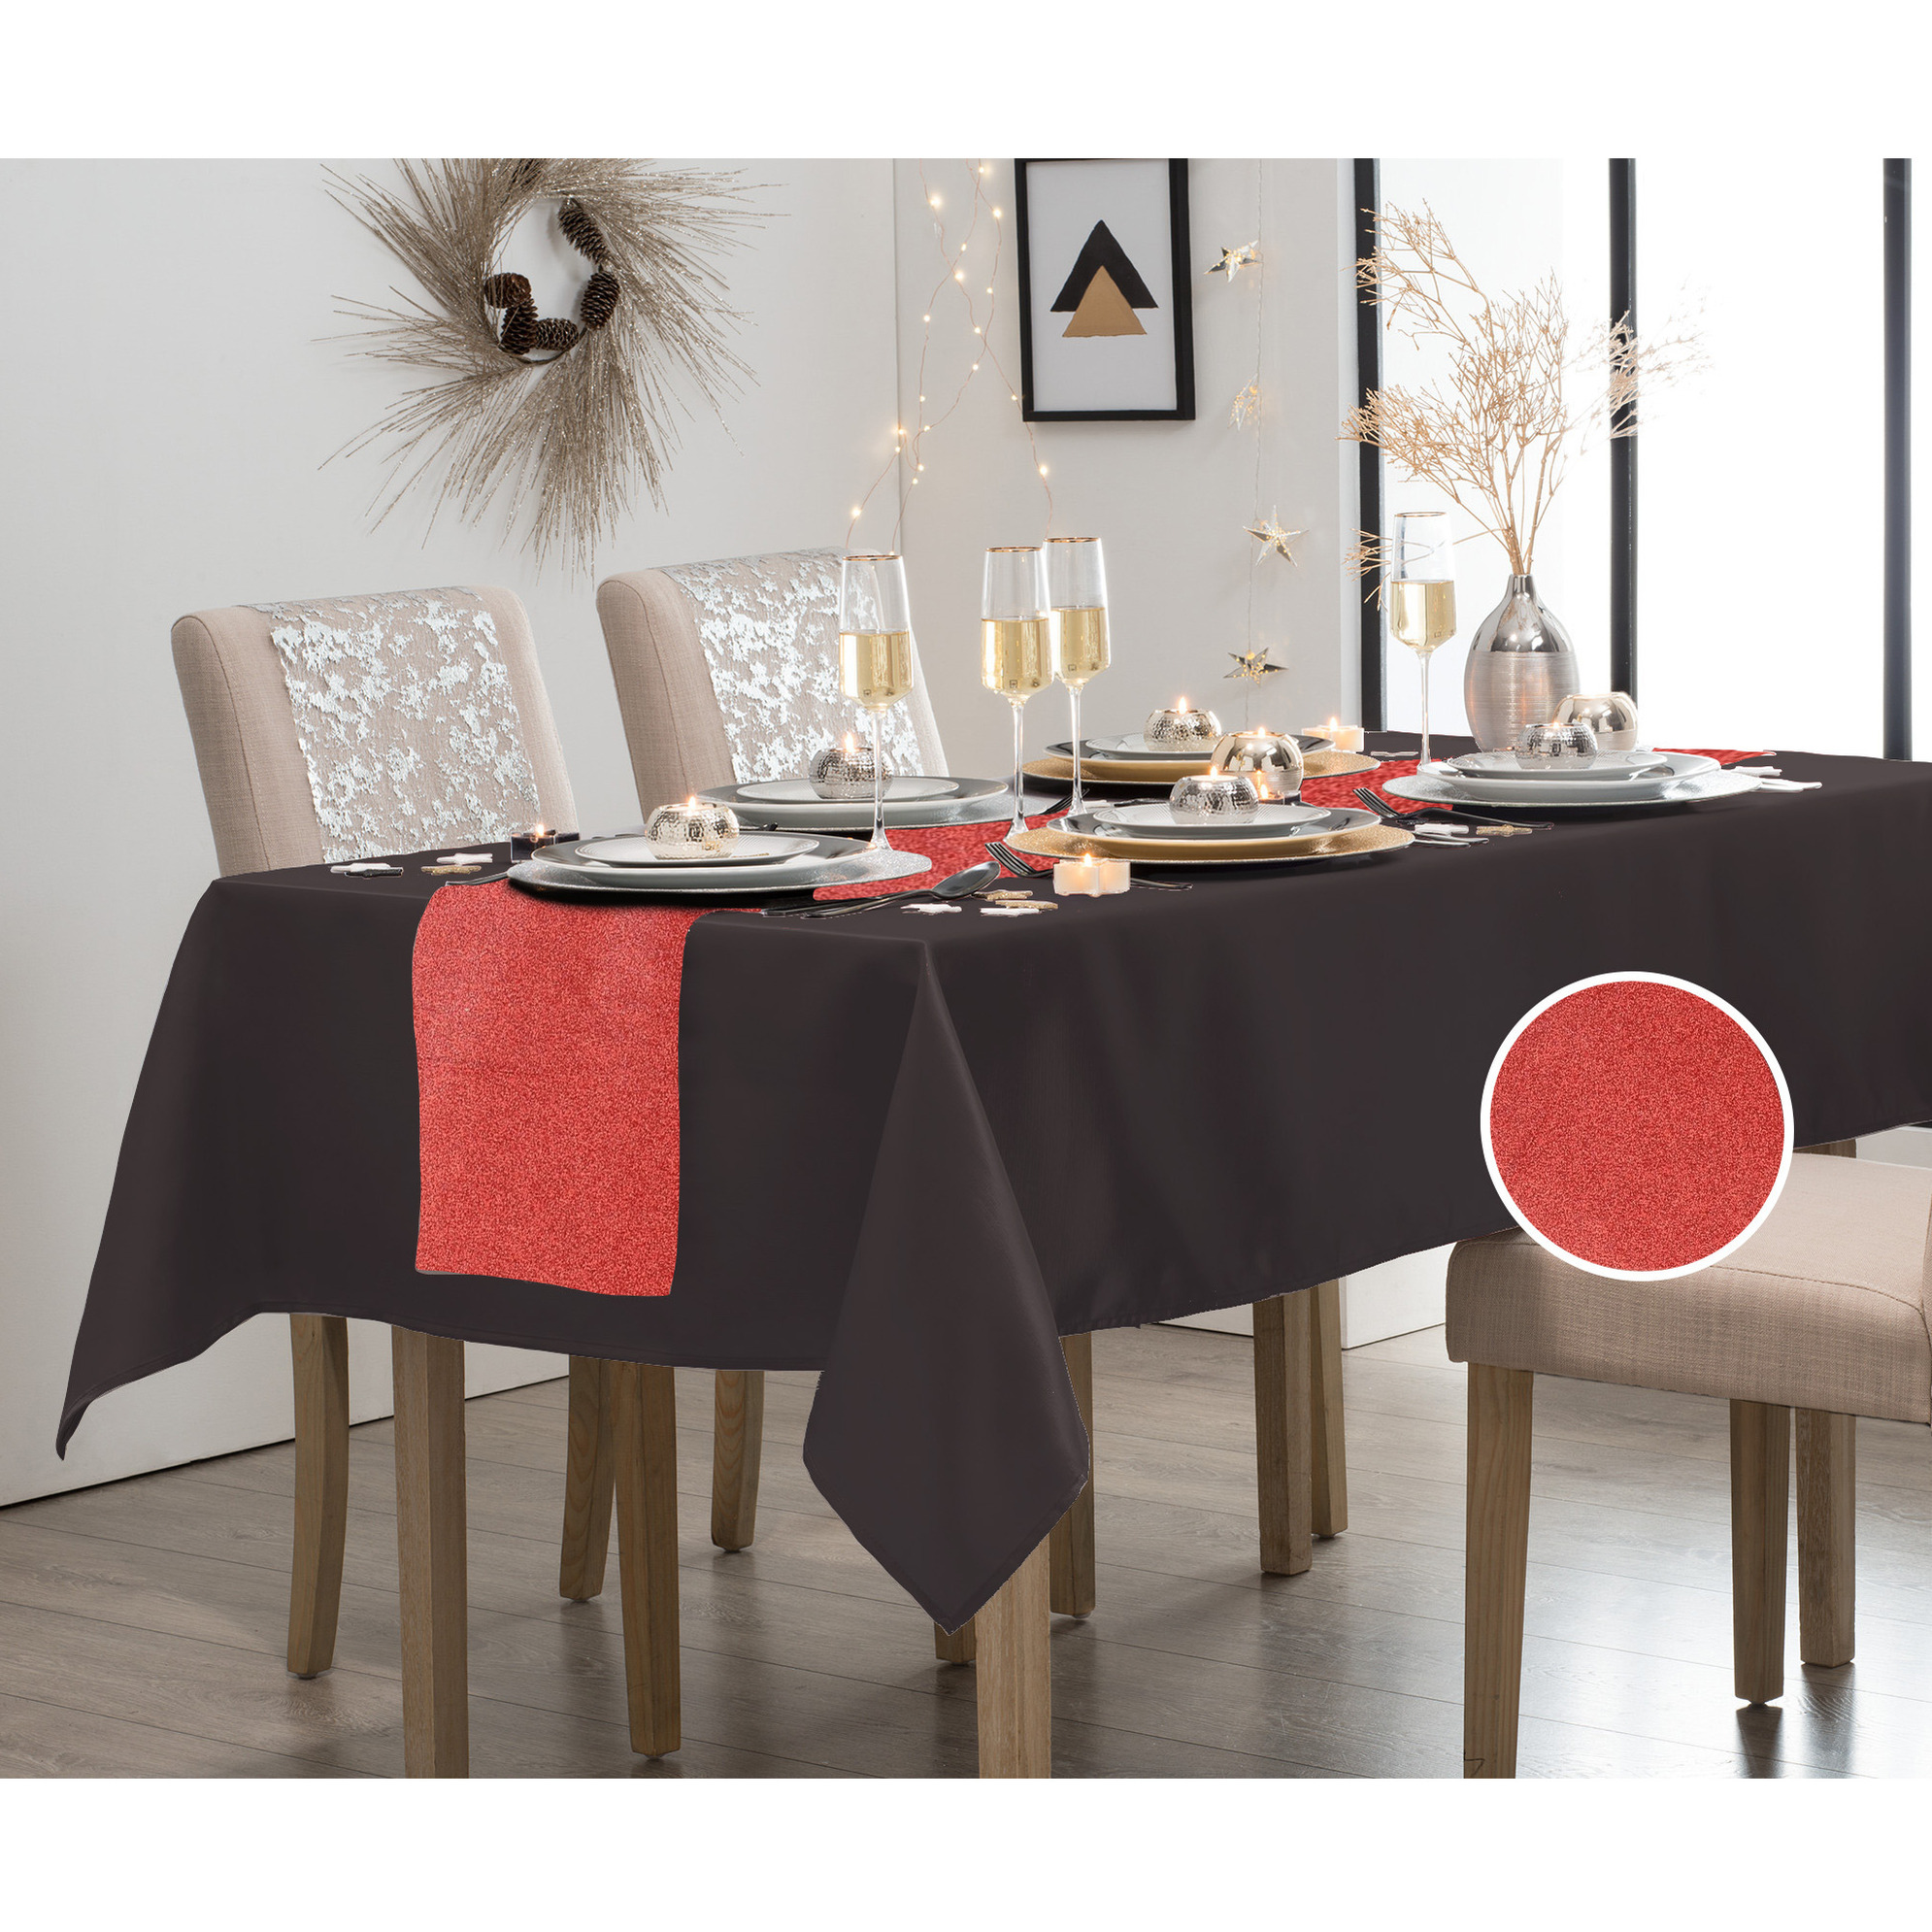 Tafelkleed/tafellaken zwart polyester 140 x 240cm met tafelloper rood -